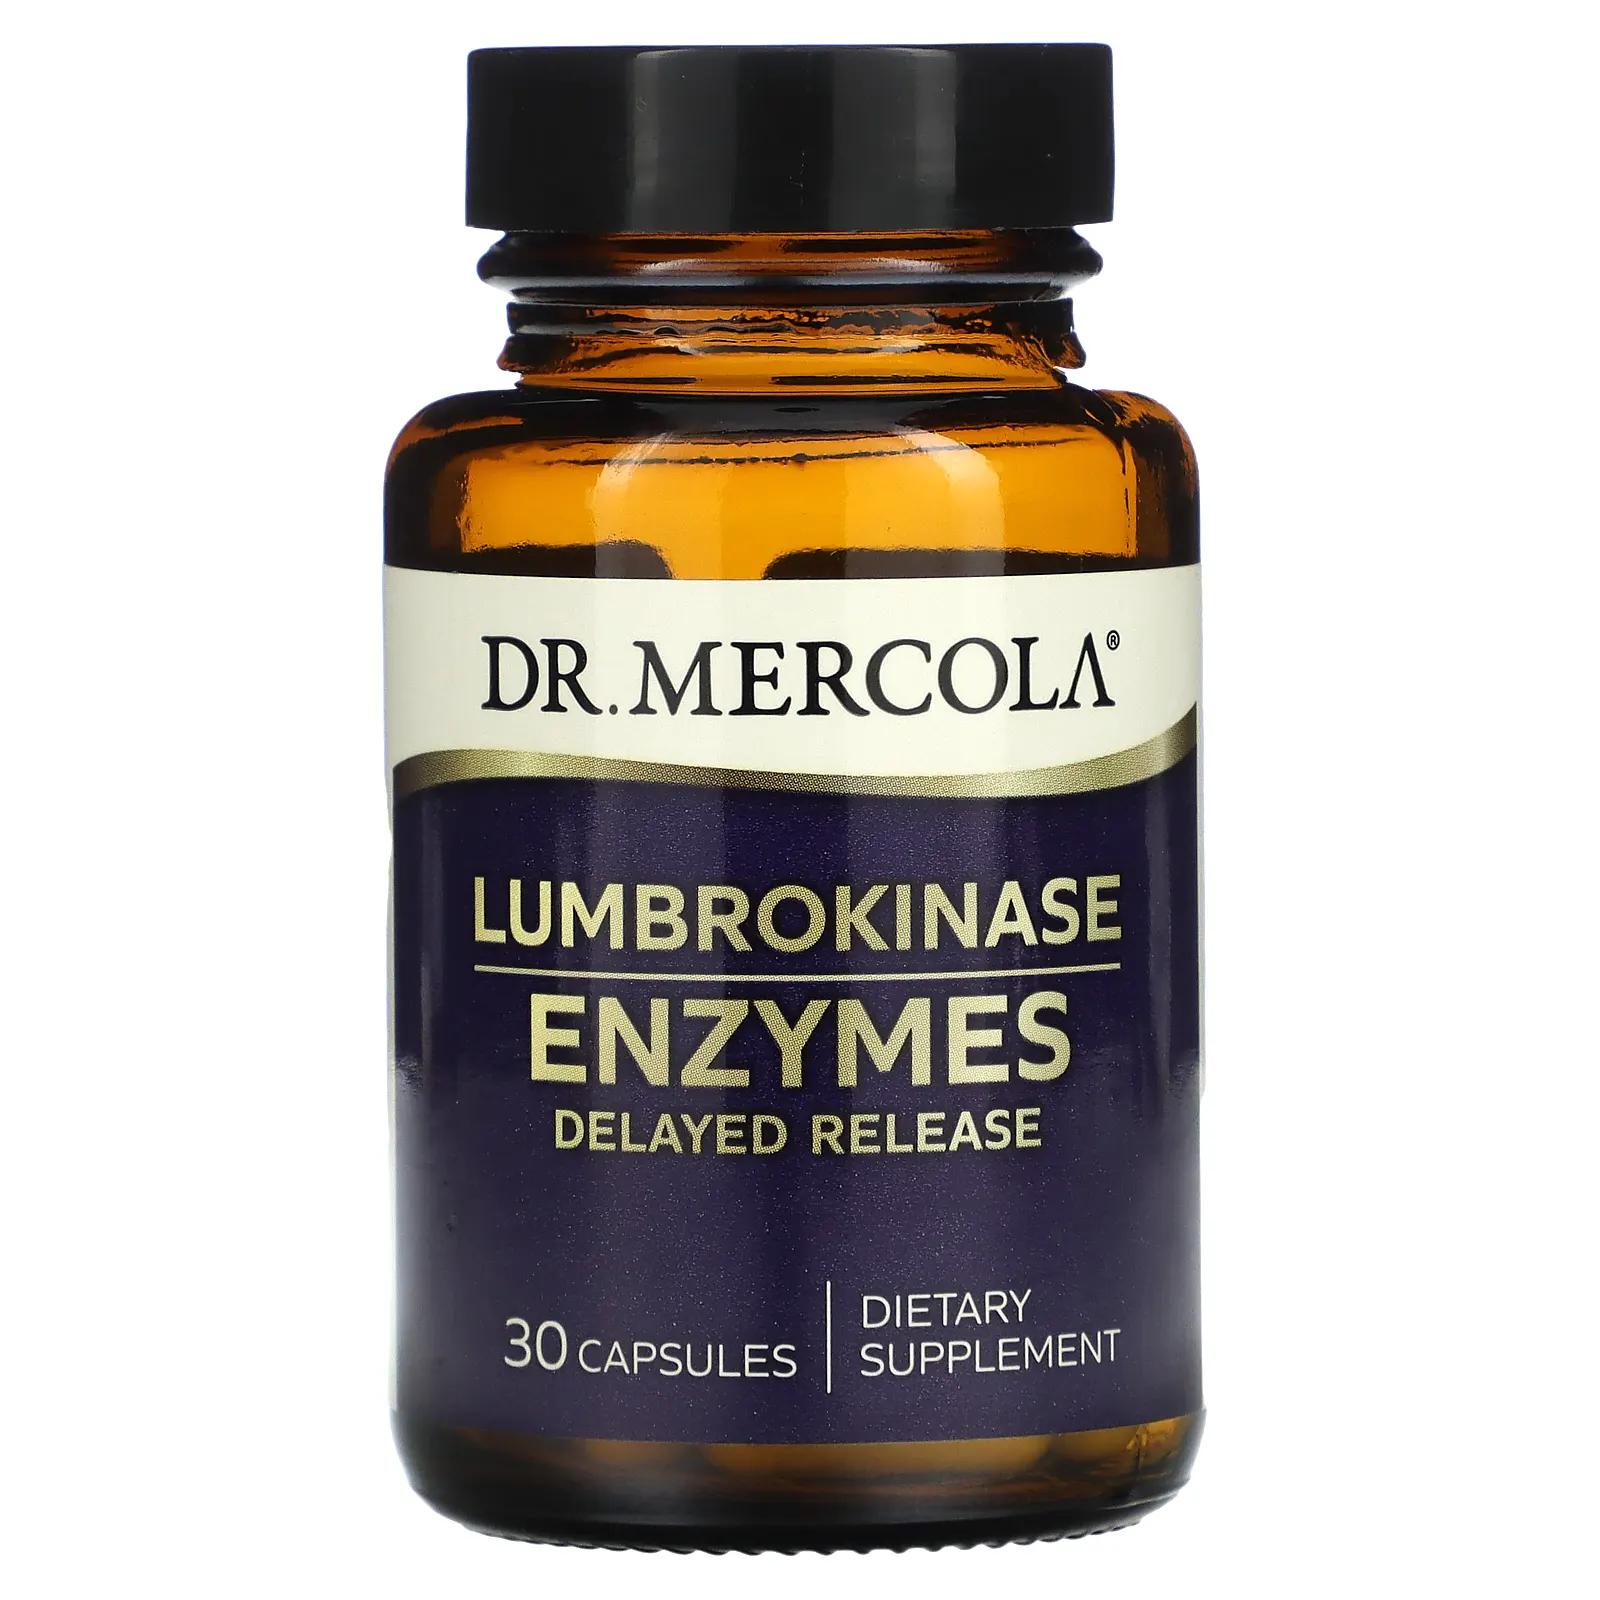 Dr. Mercola Lumbrokinase Enzymes 30 Capsules